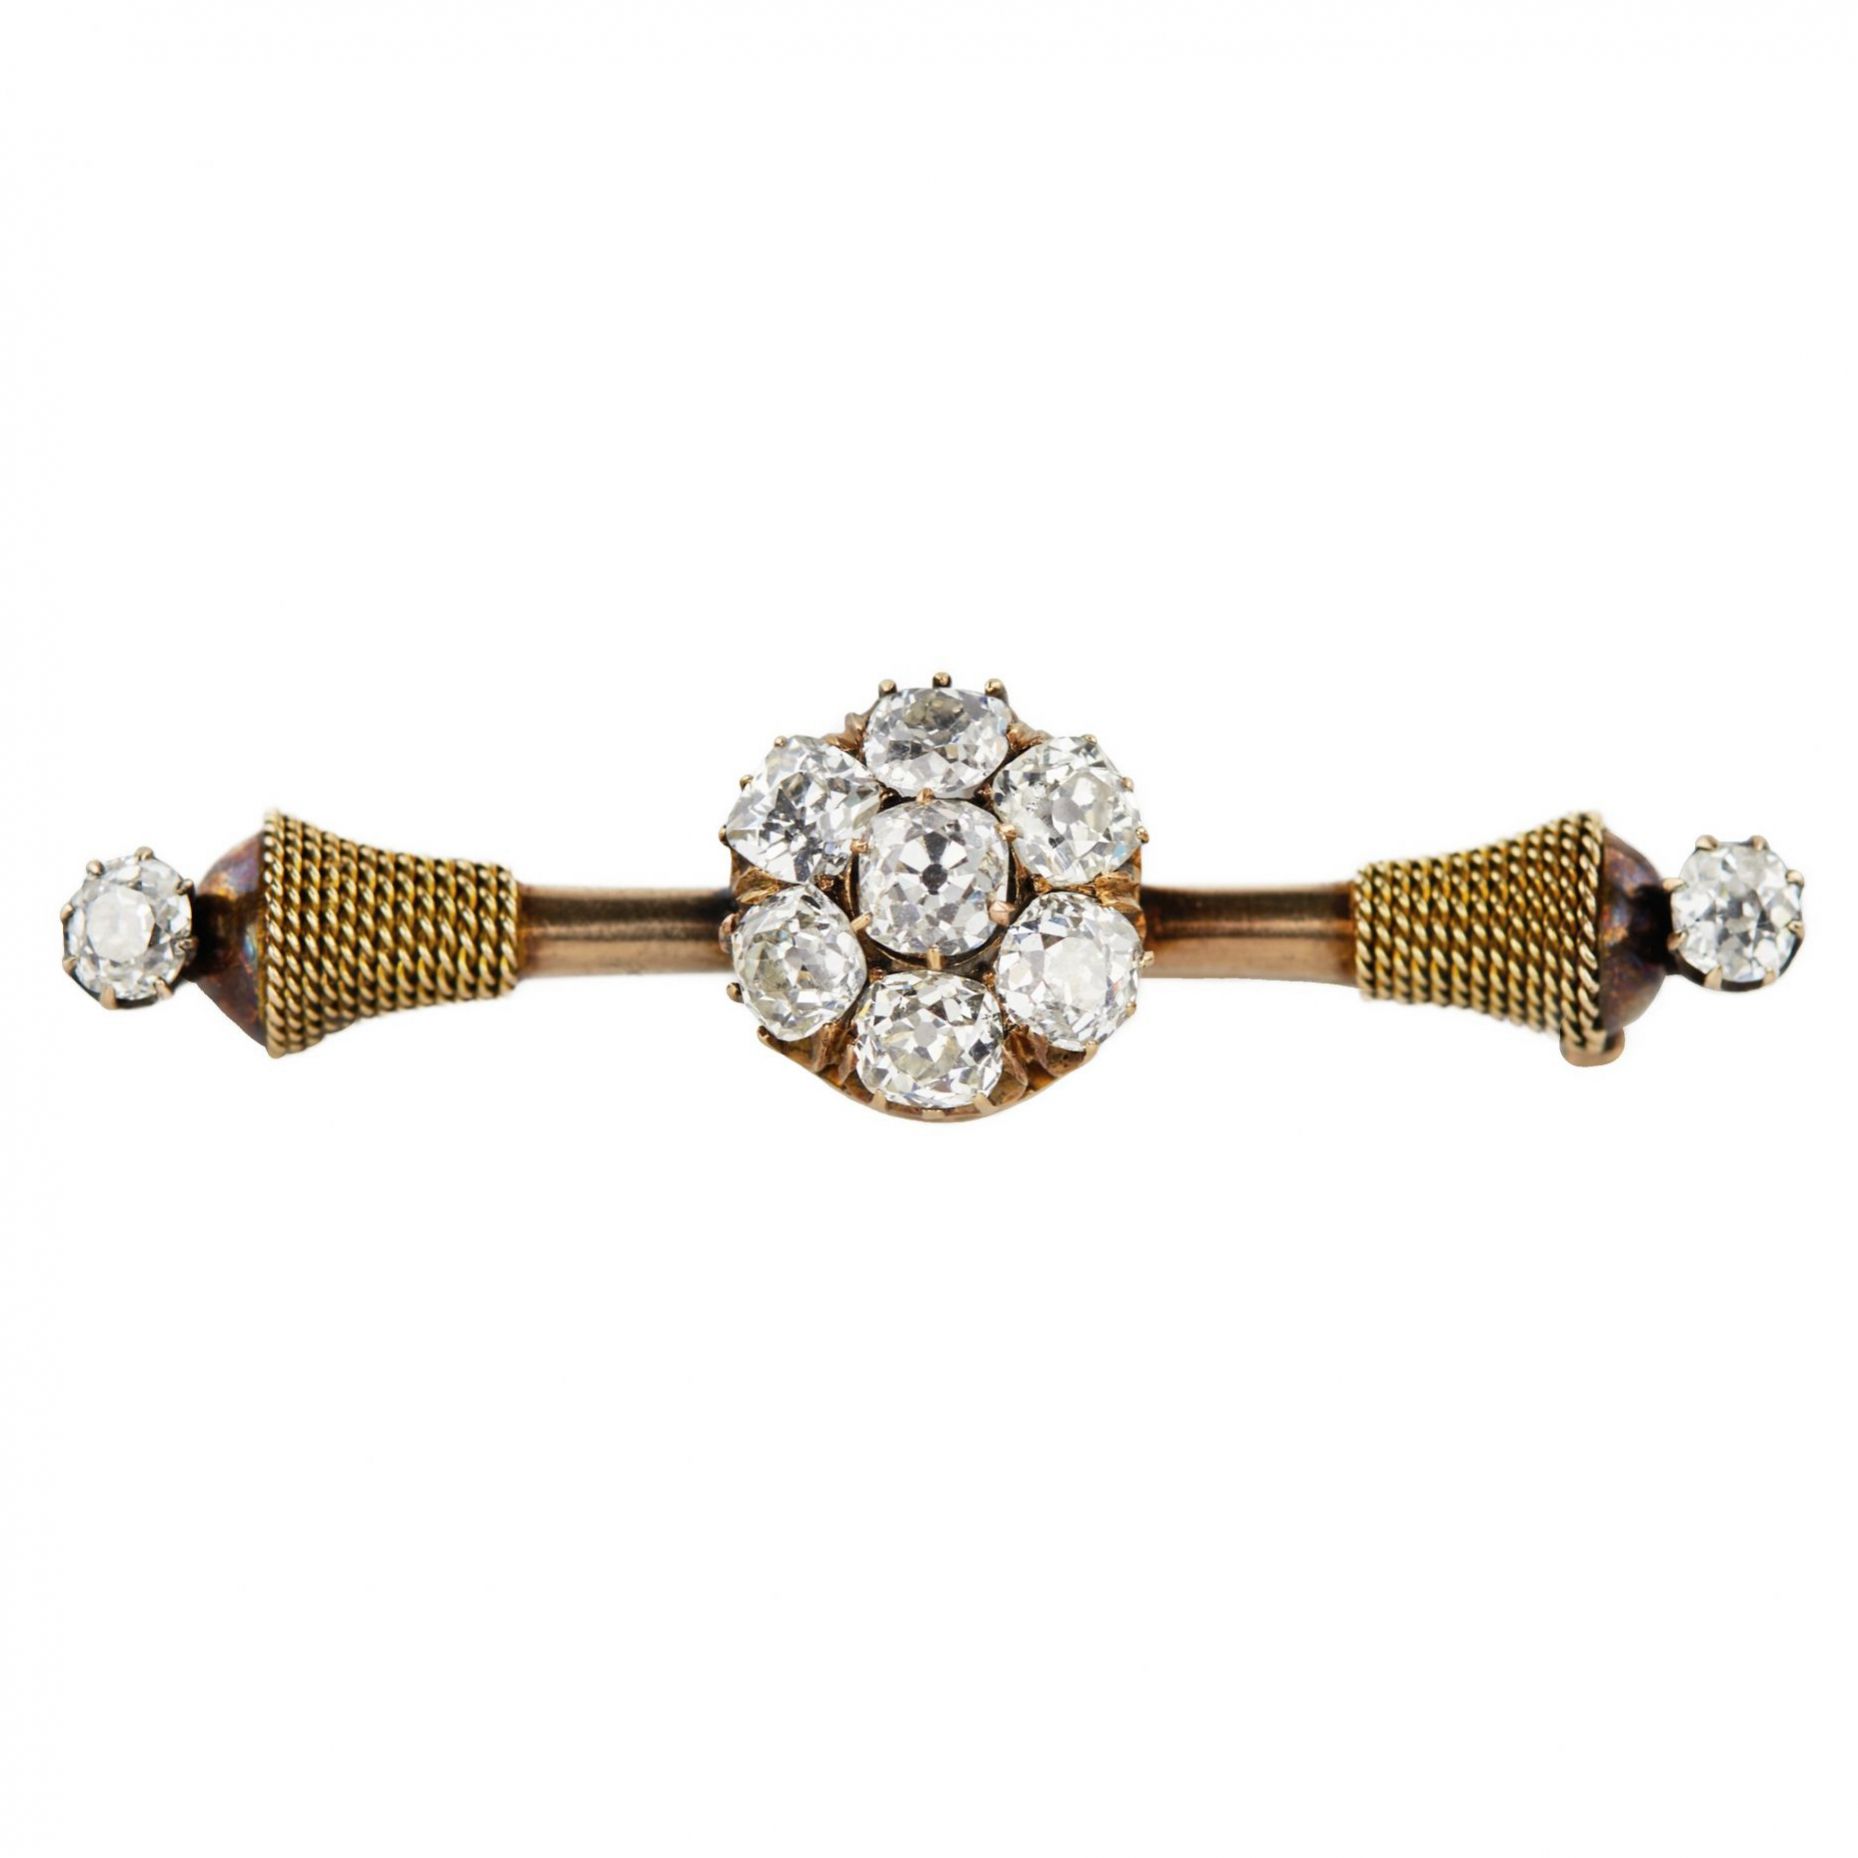 Elegant-Russian-gold-brooch-56-assay-value-with-diamonds-Petersburg-1908-1917-